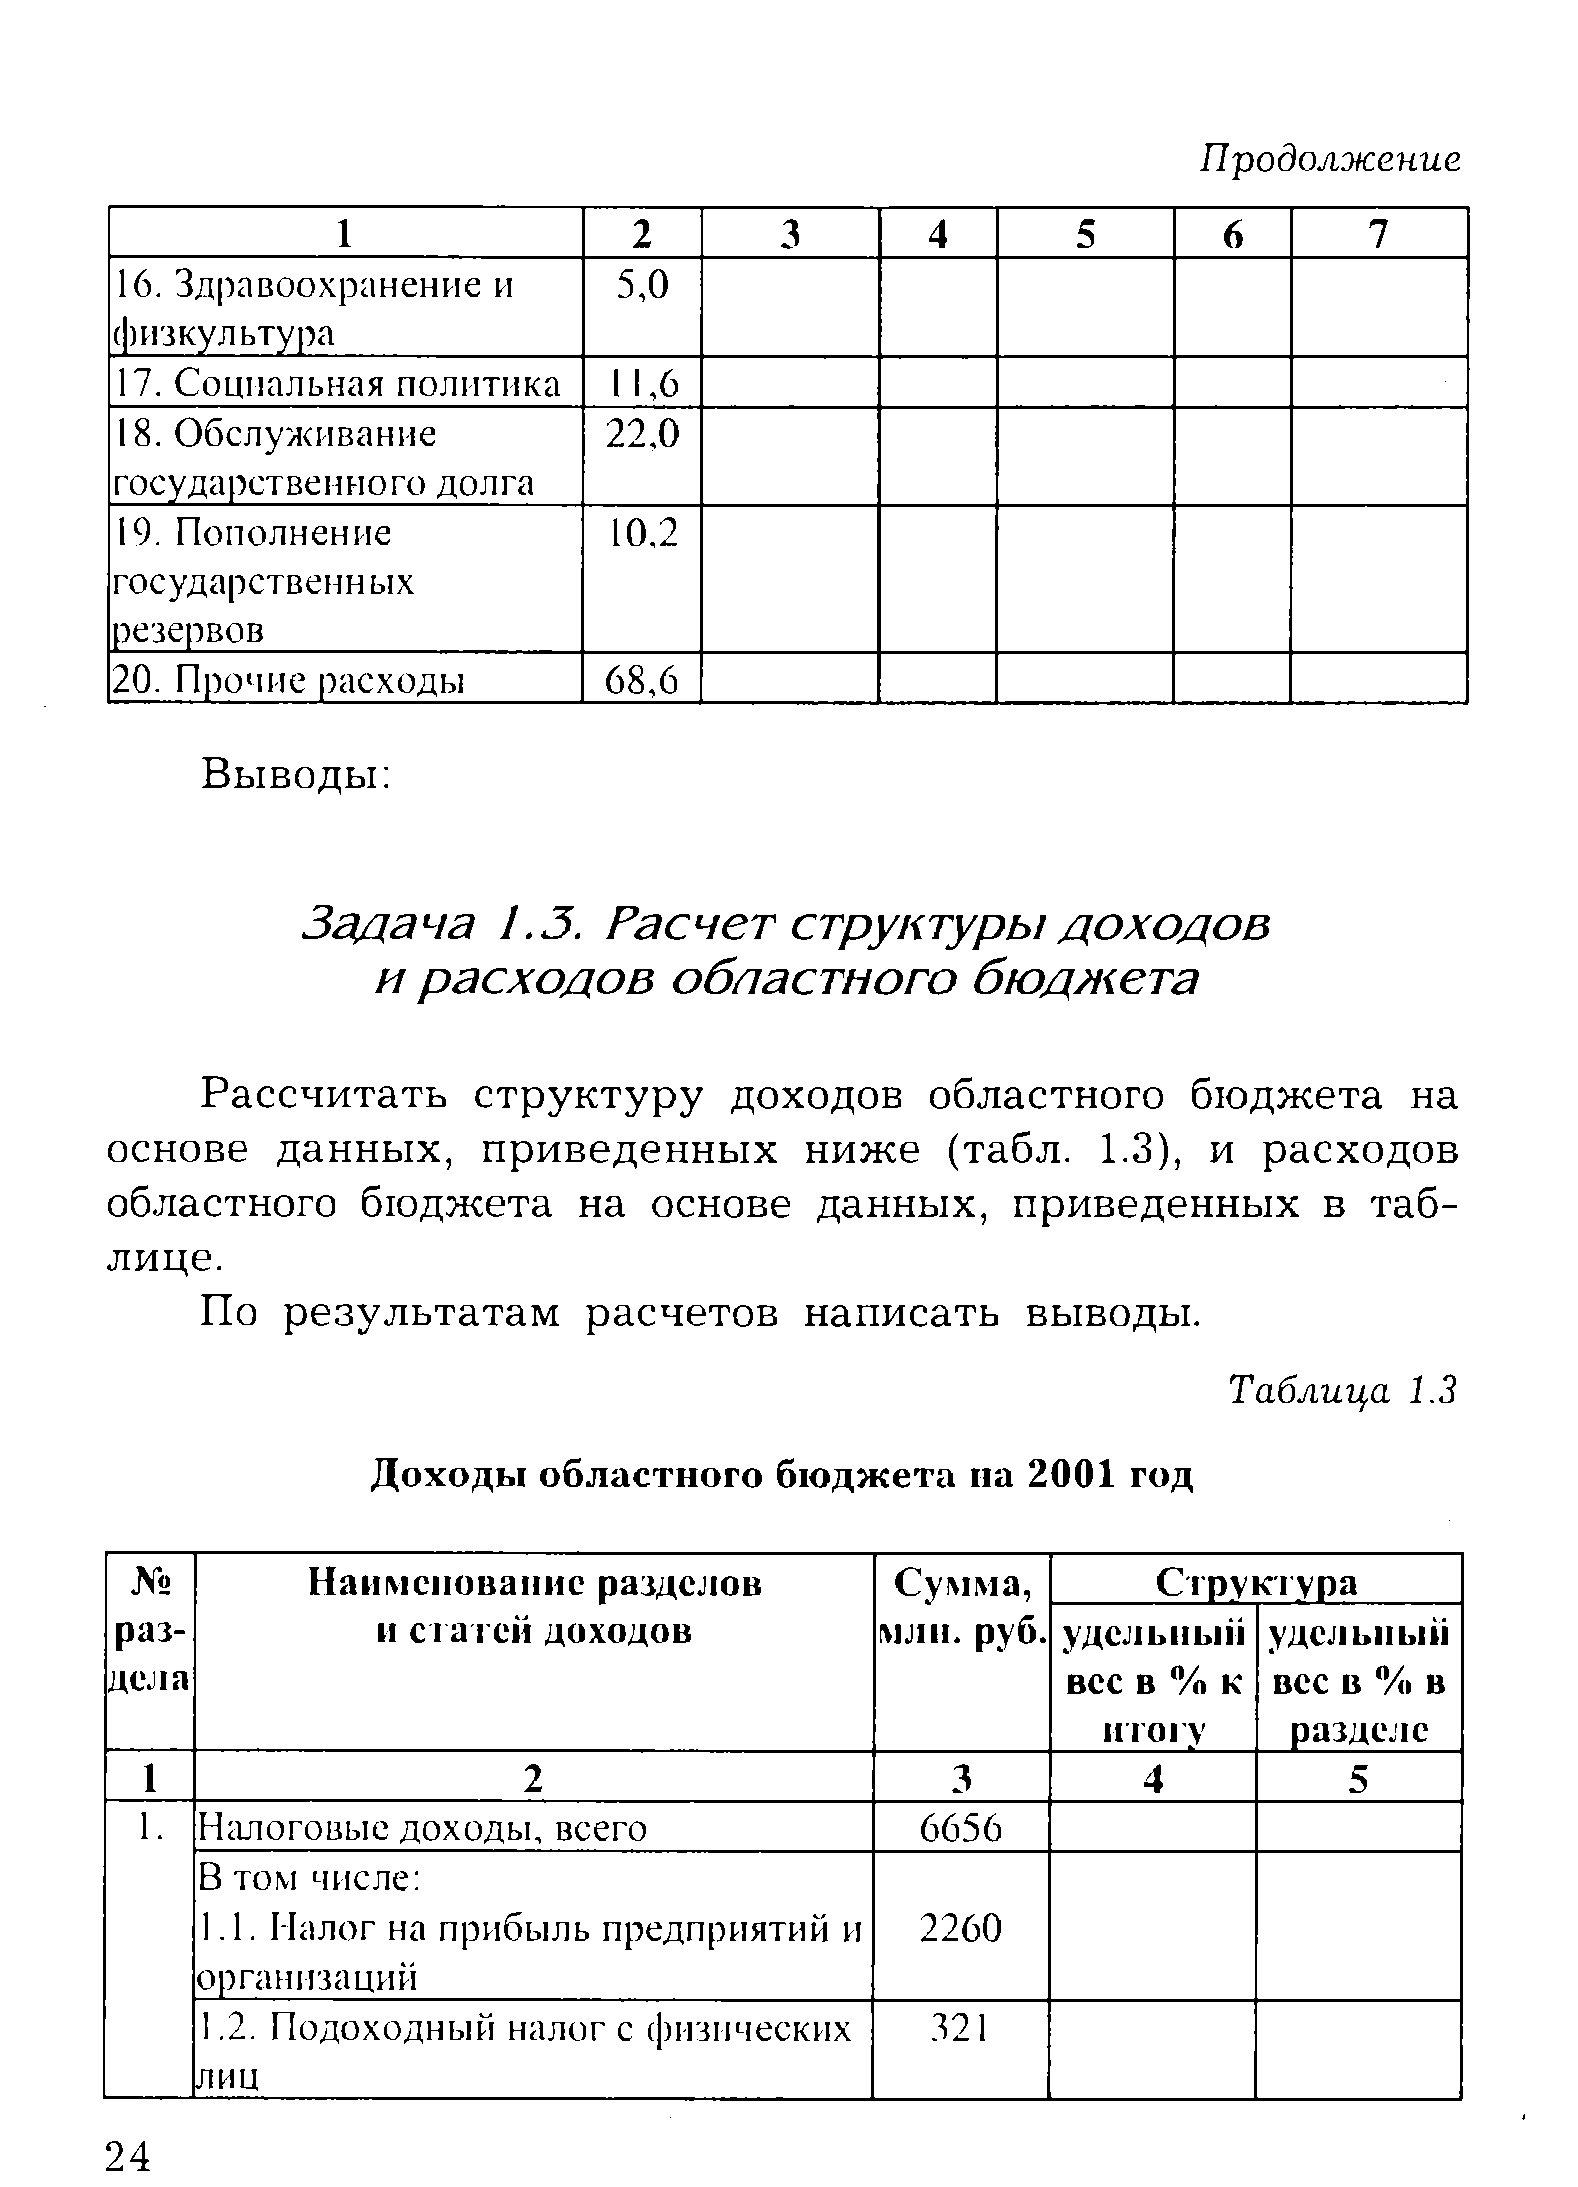 Таблица 1.3 Доходы областного бюджета на 2001 год
